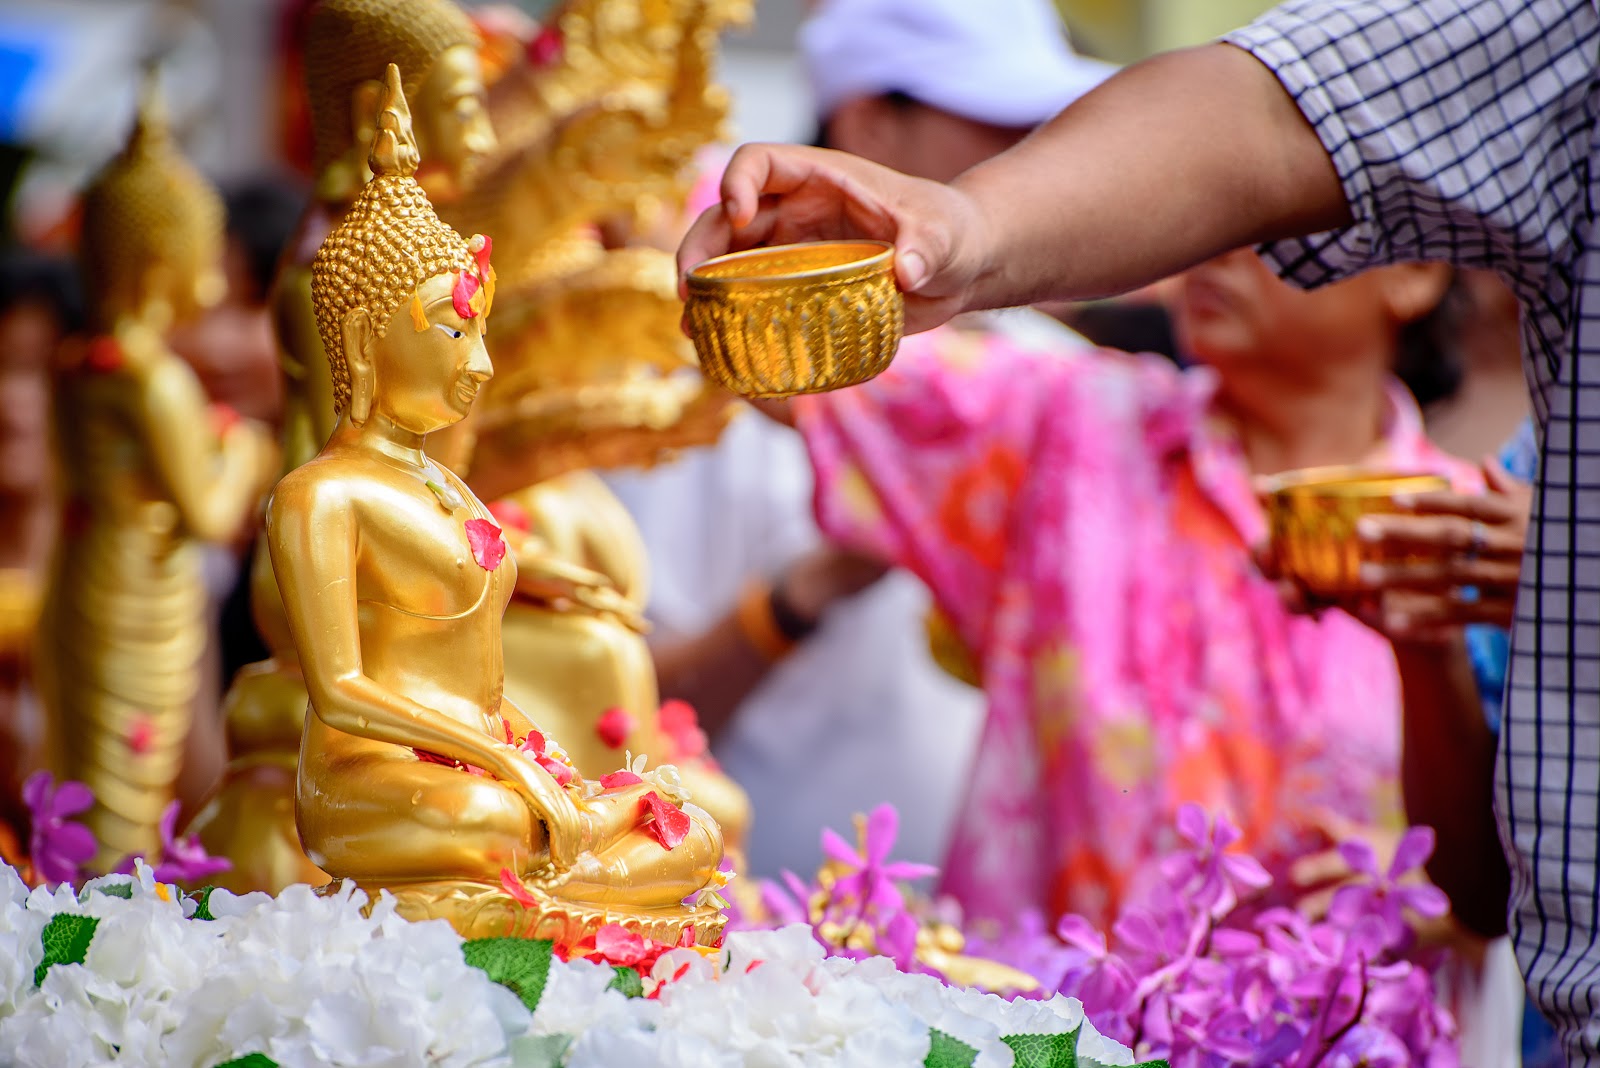 Spring Into Songkran Virtual Event and Celebrating Songkran Traditions